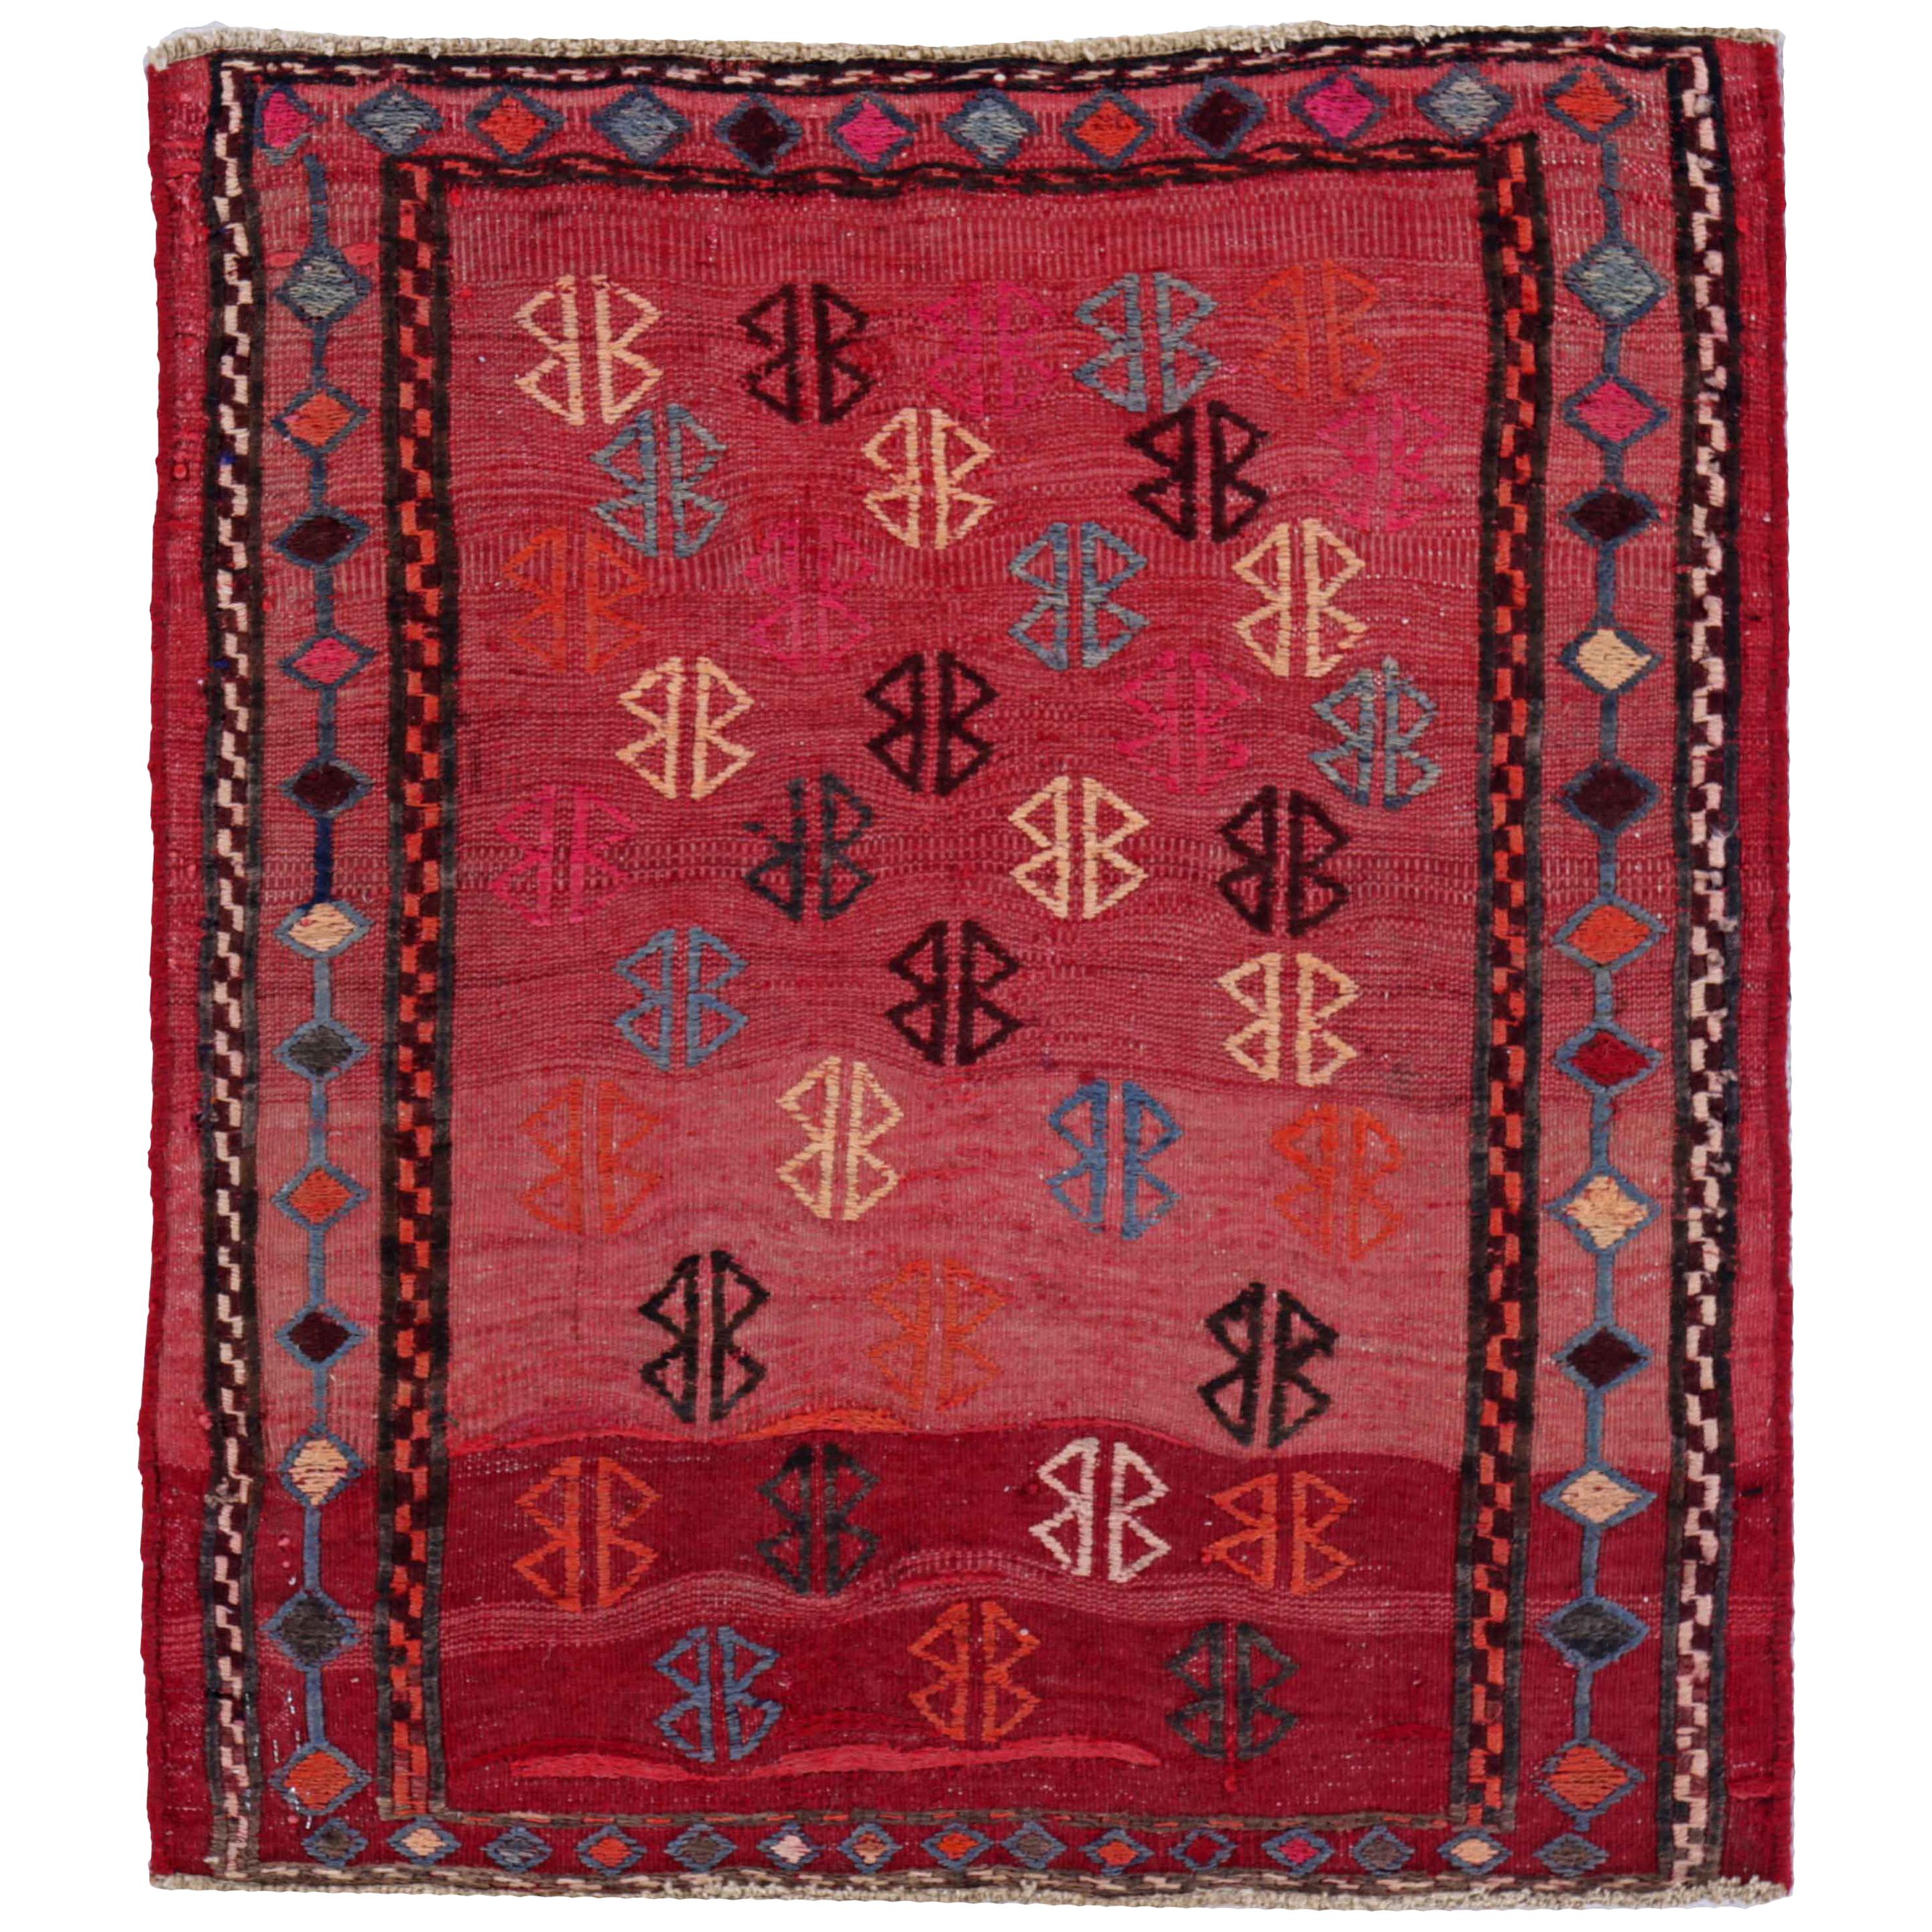 Antique Persian Square Rug Kilim Design For Sale